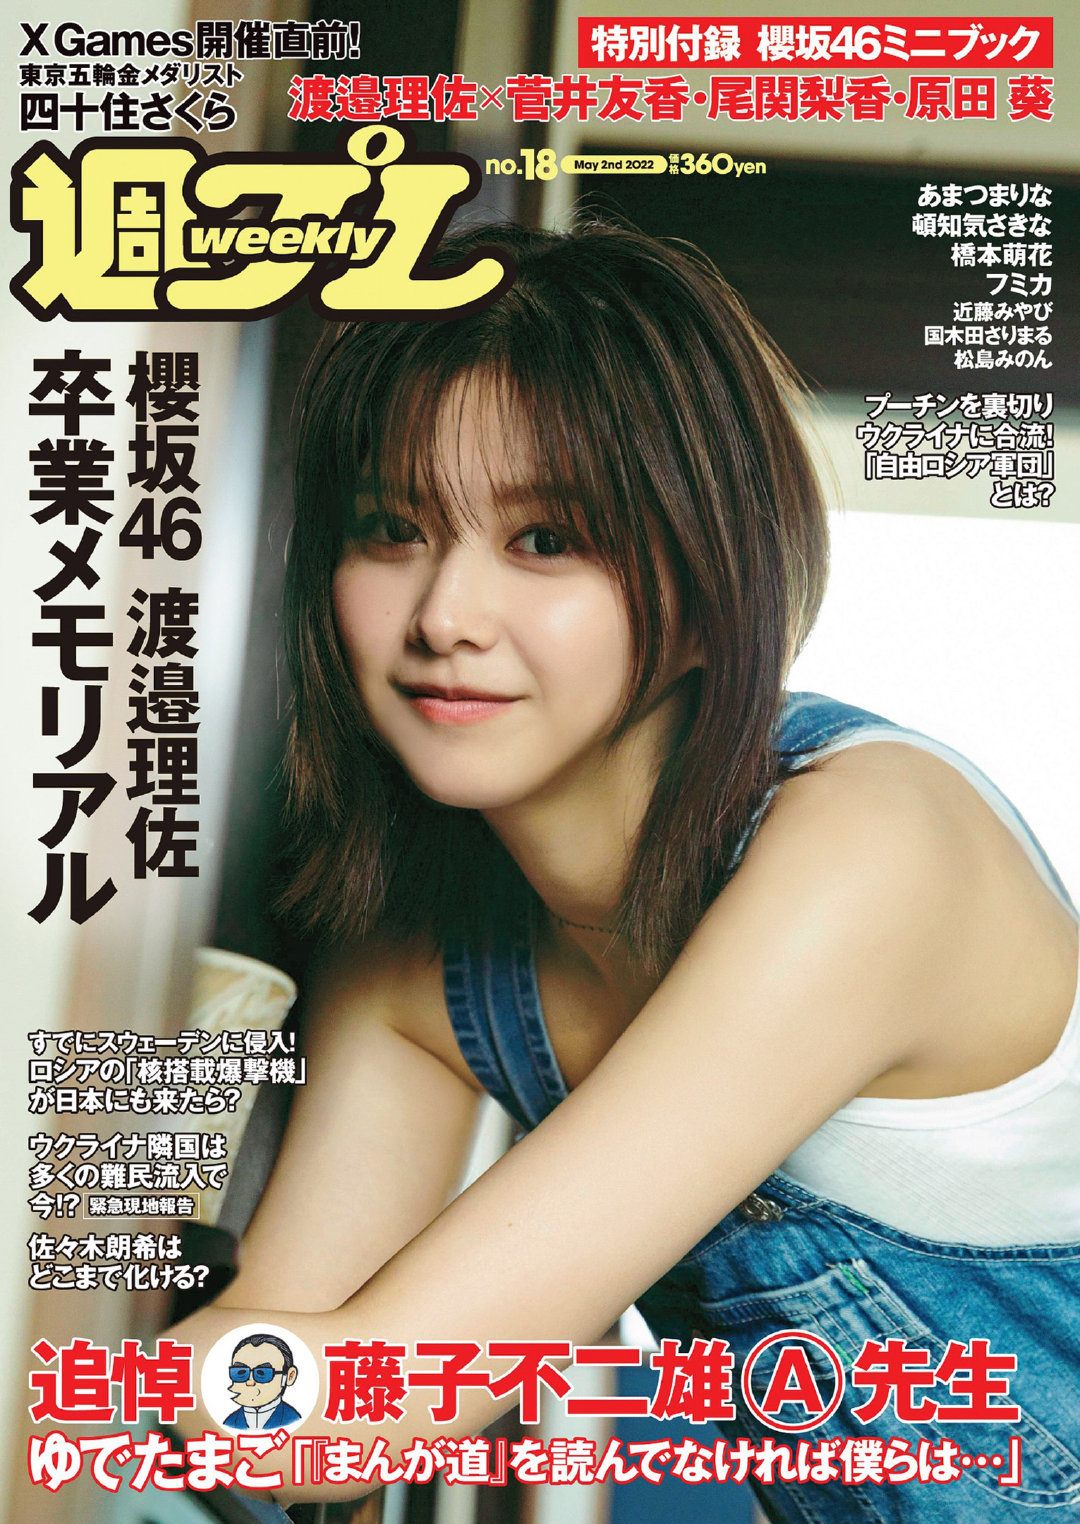 [Weekly Playboy] 2022 No.18 渡邉理佐 - itotii